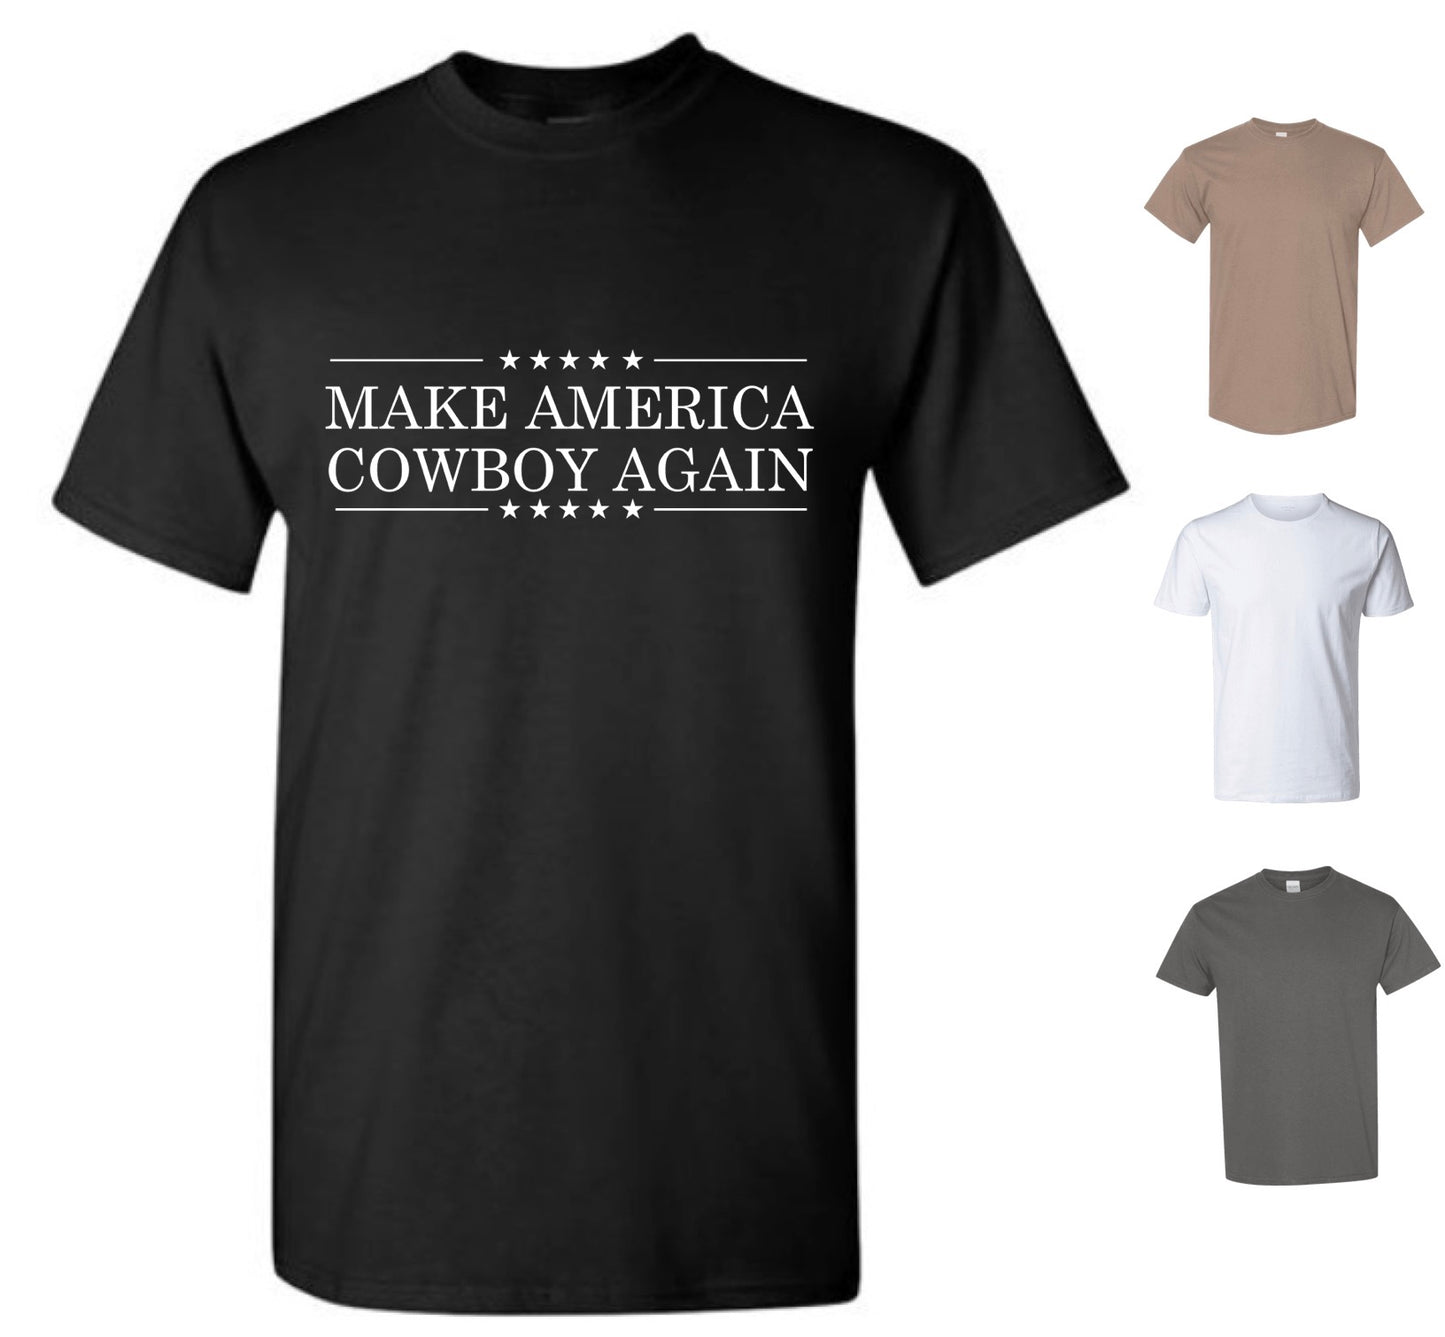 Make American Cowboy Again T-Shirt (FREE Shipping)